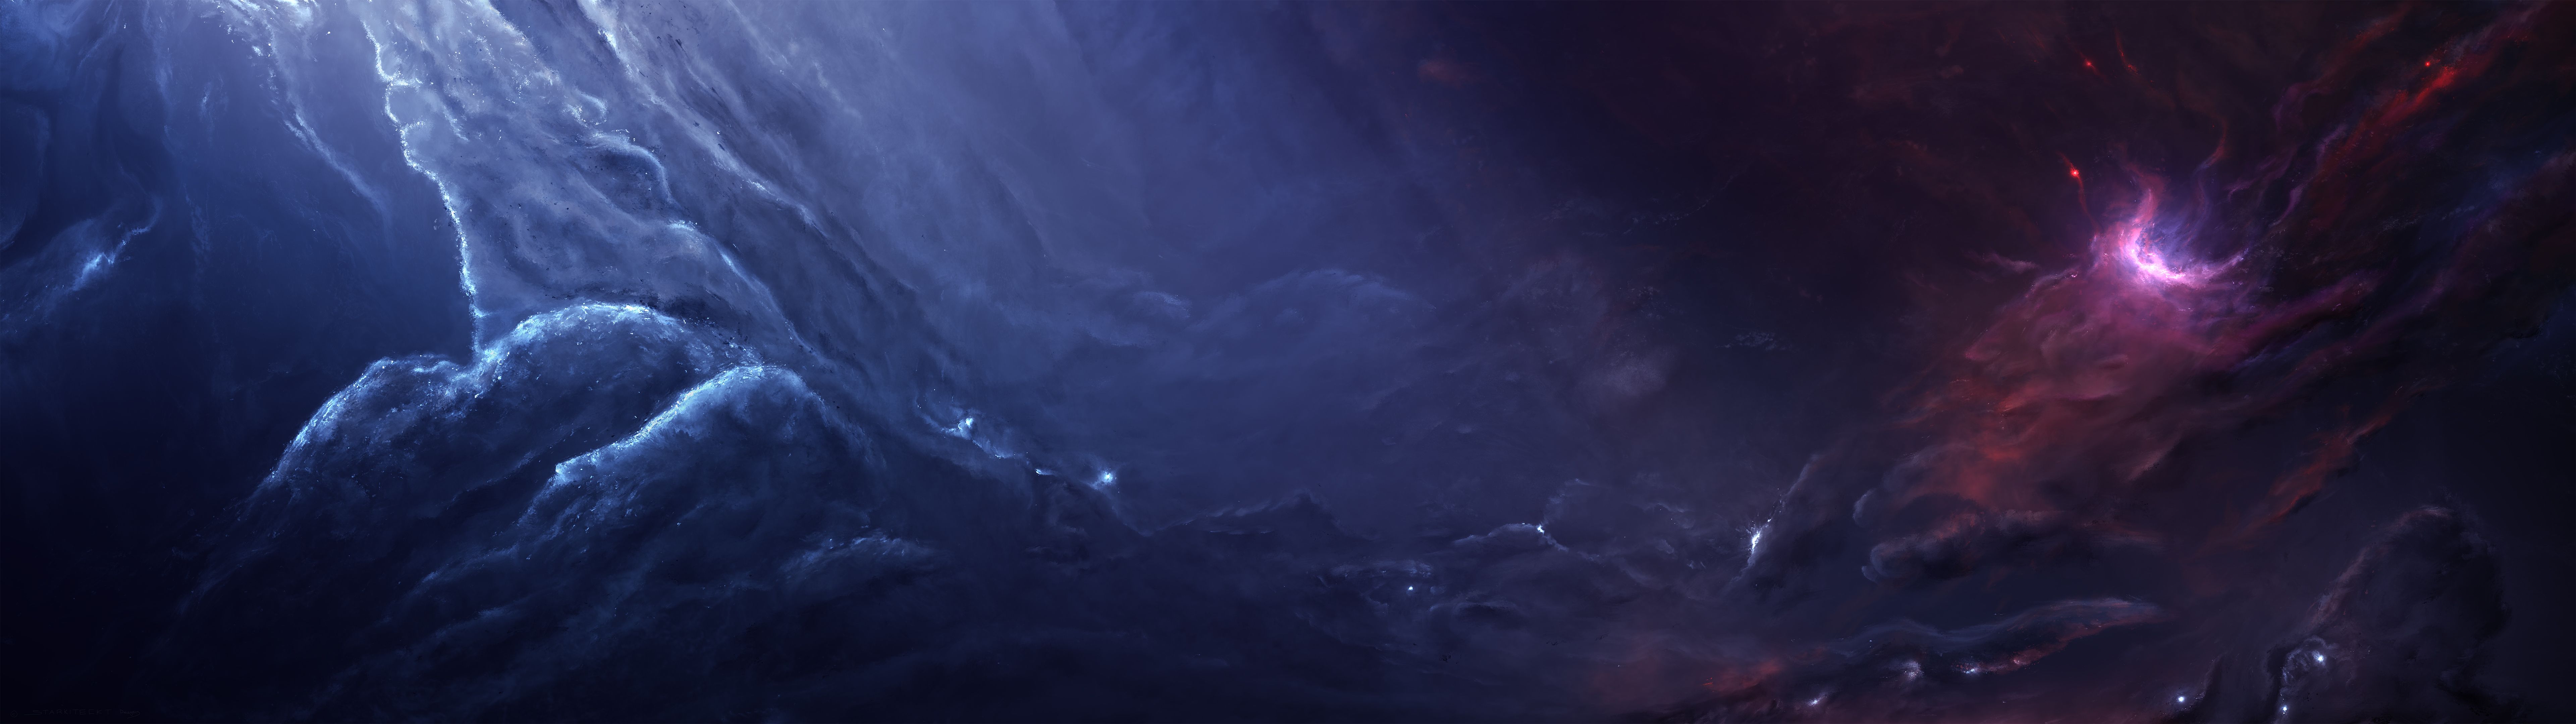 10 Nebula HD Wallpapers Backgrounds - Wallpaper Abyss